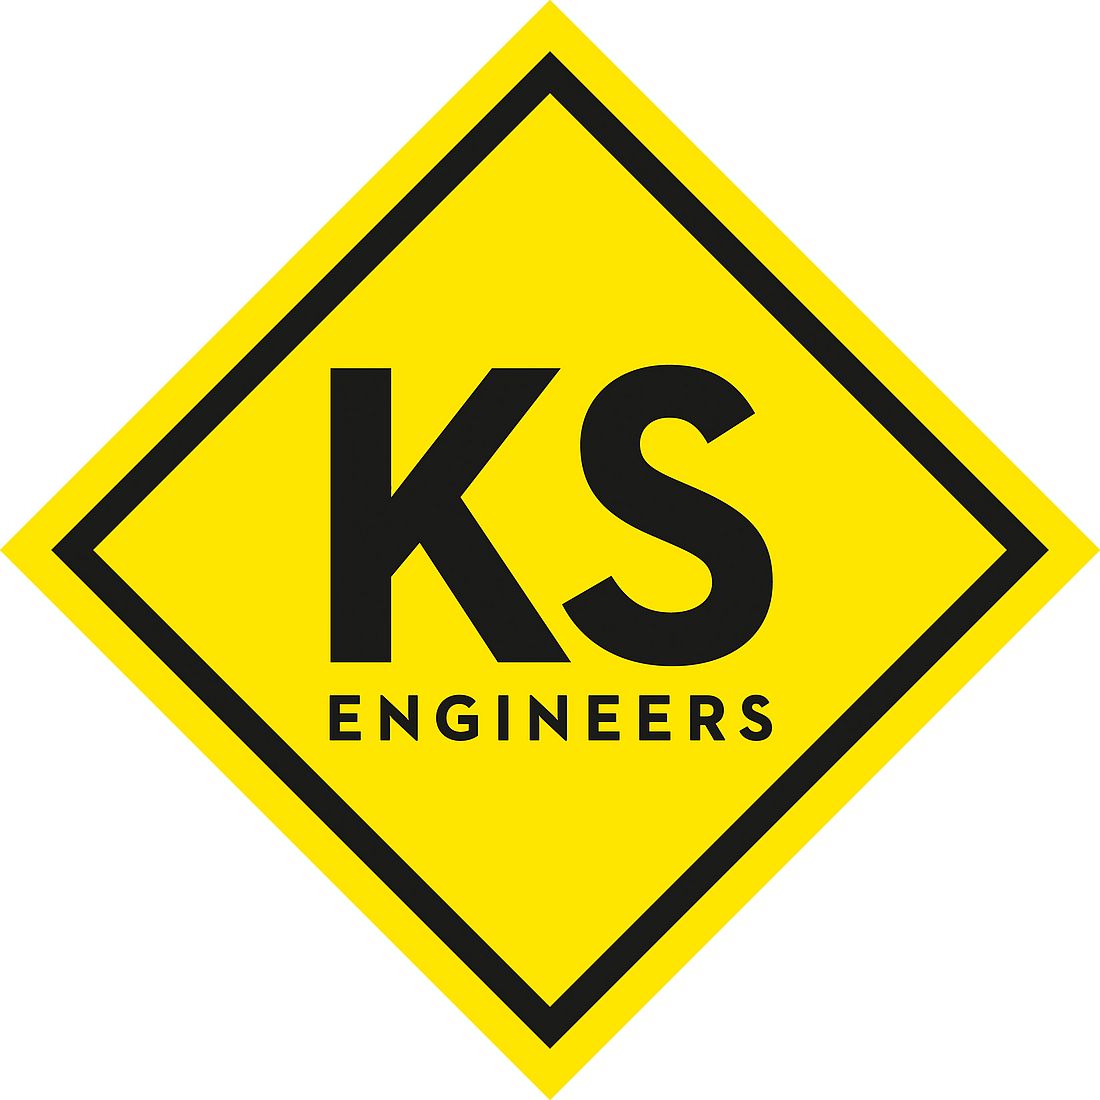 Logo KS Engineers 2014 06 03 Diagonale 21cm 300dpi